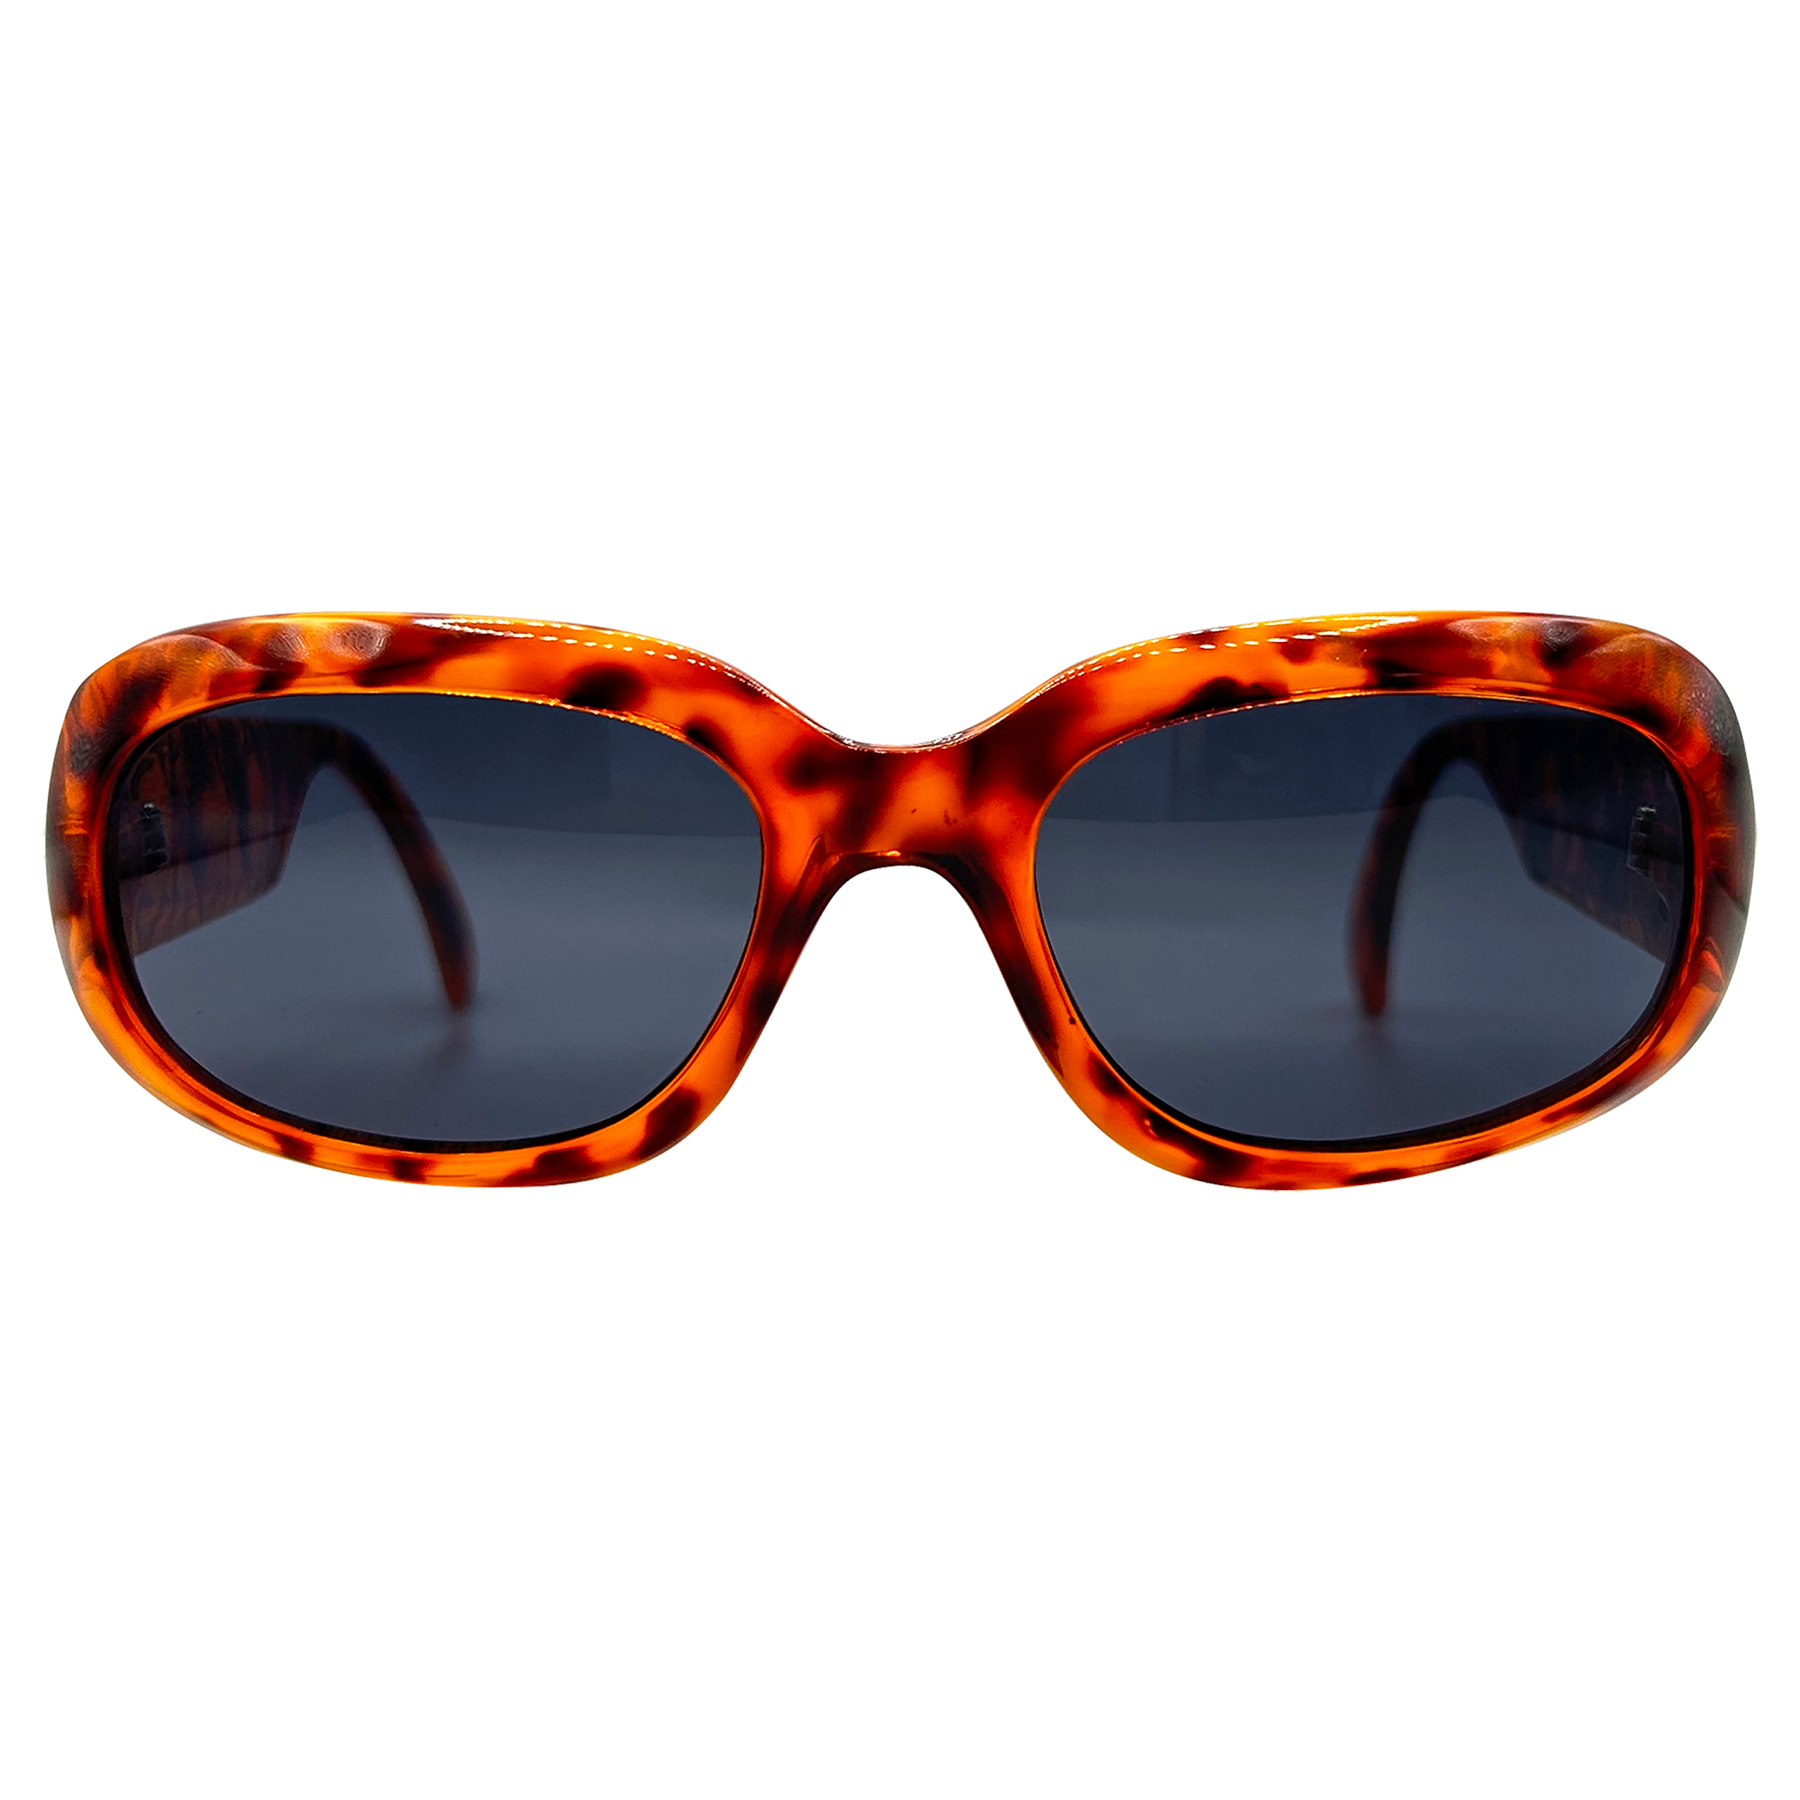 RAVE-UP Tortoise/Super Dark Mod Square Sunglasses